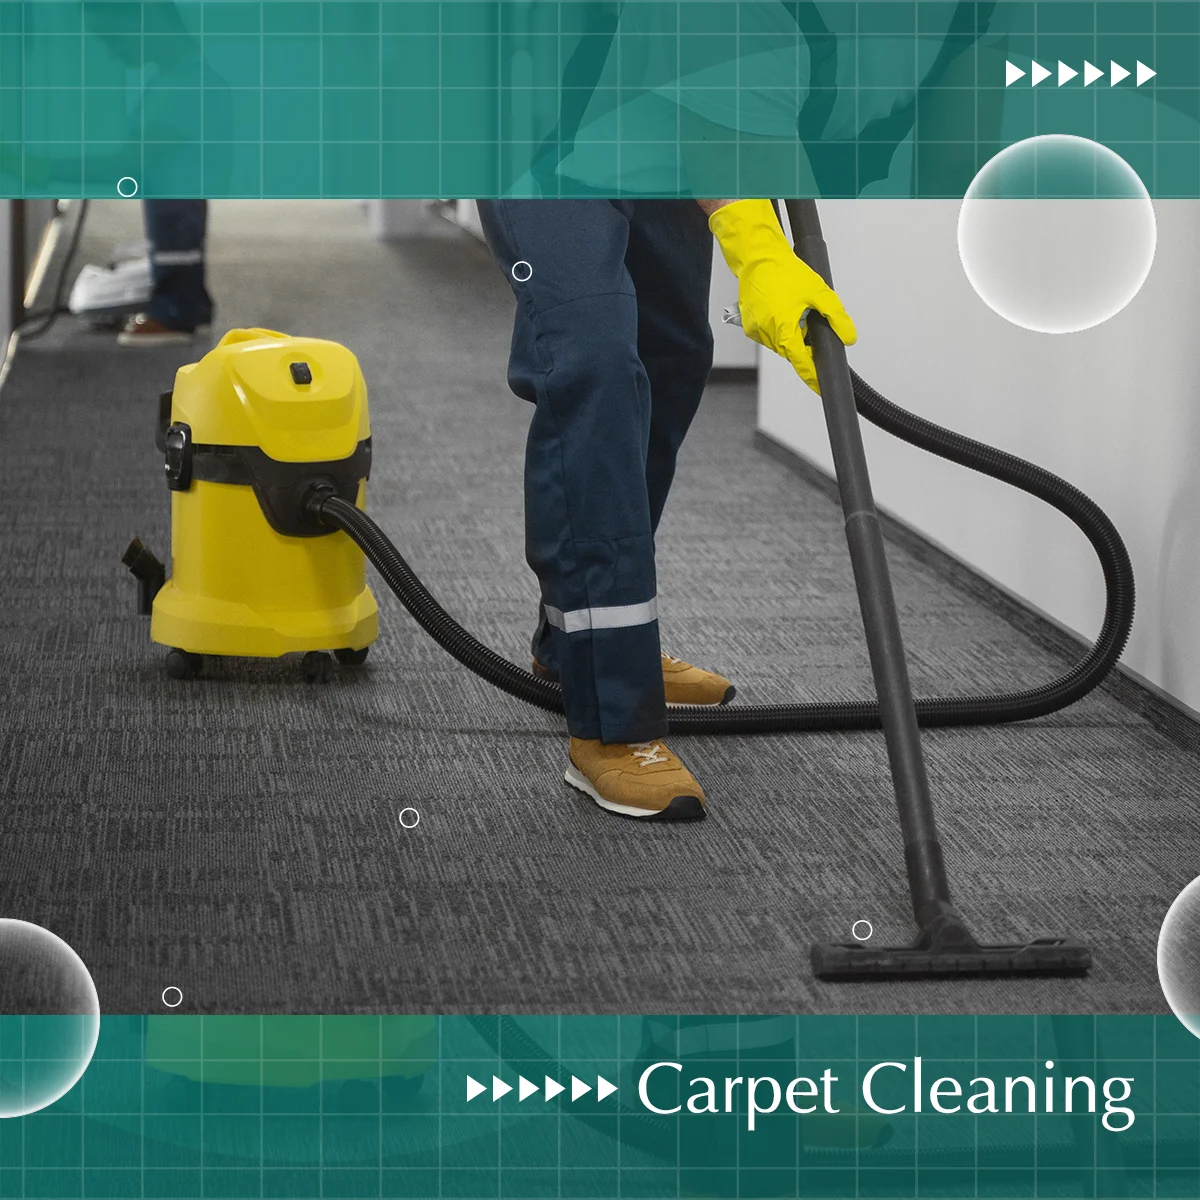 carpet cleaning service dubai